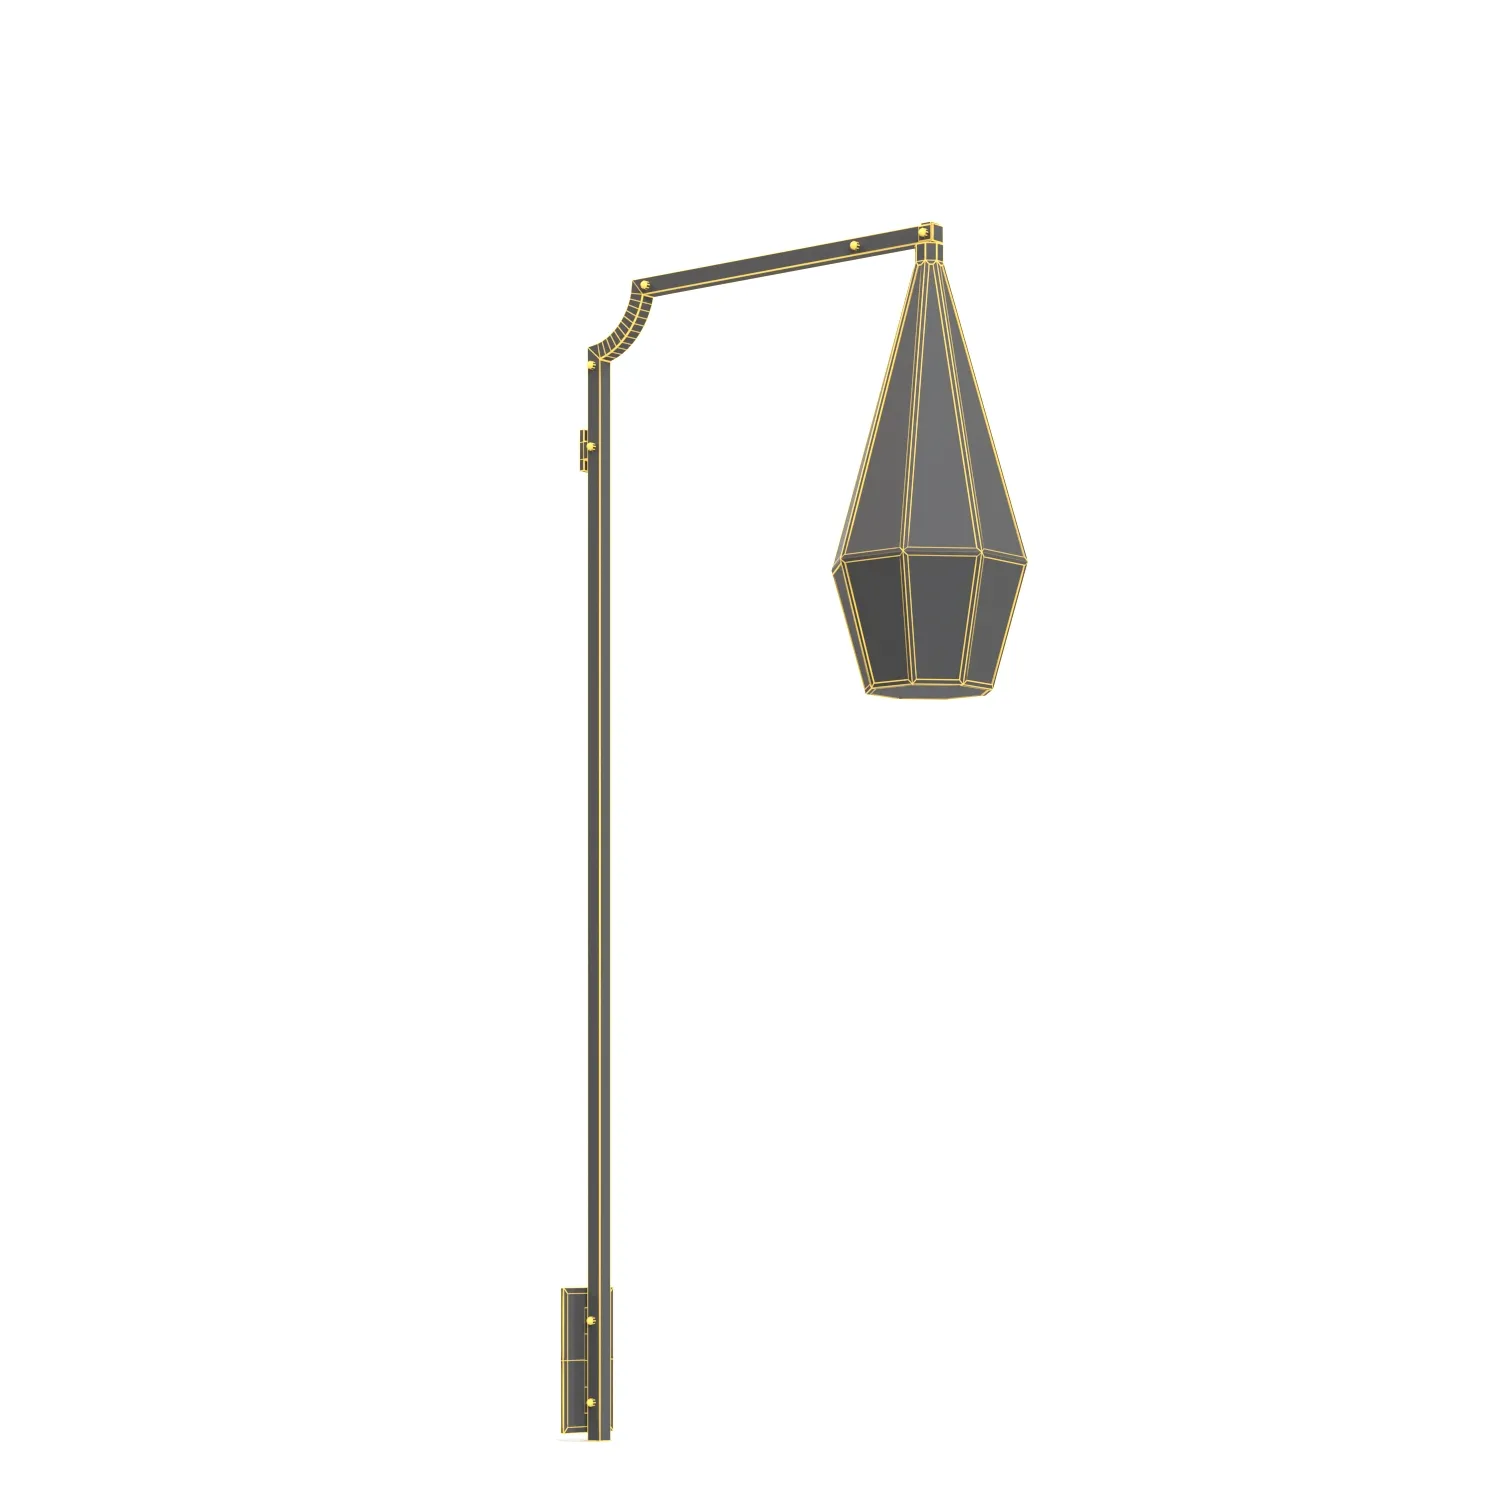 Exterior Street Lamp Light PBR 3D Model_07